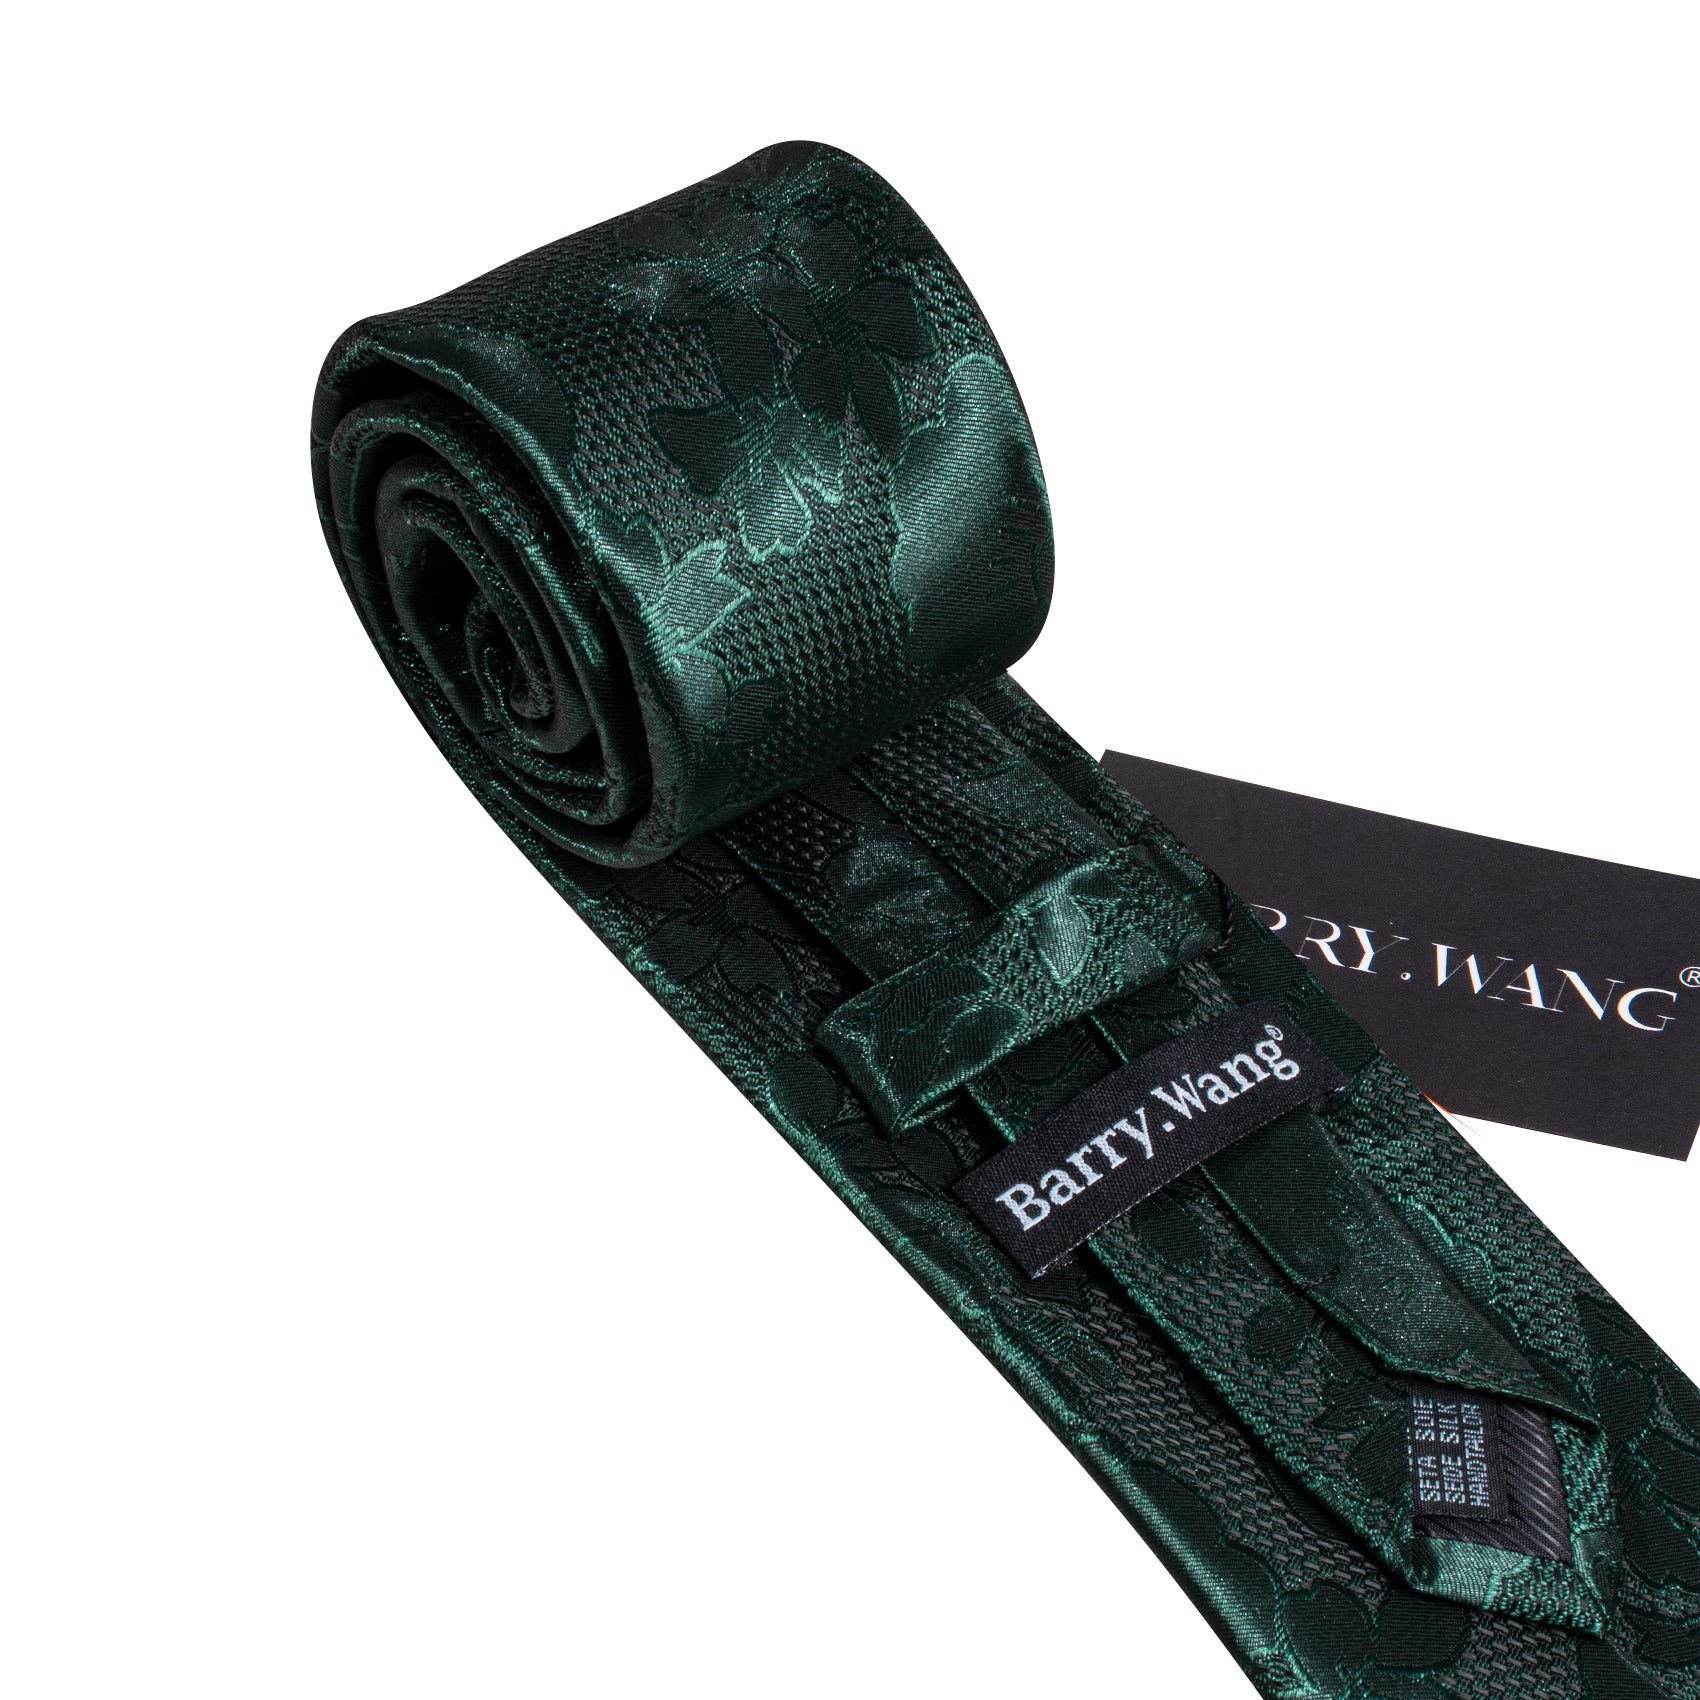 Barry Wang Dark Green Tie Flower Silk Tie Hanky Cufflinks Set